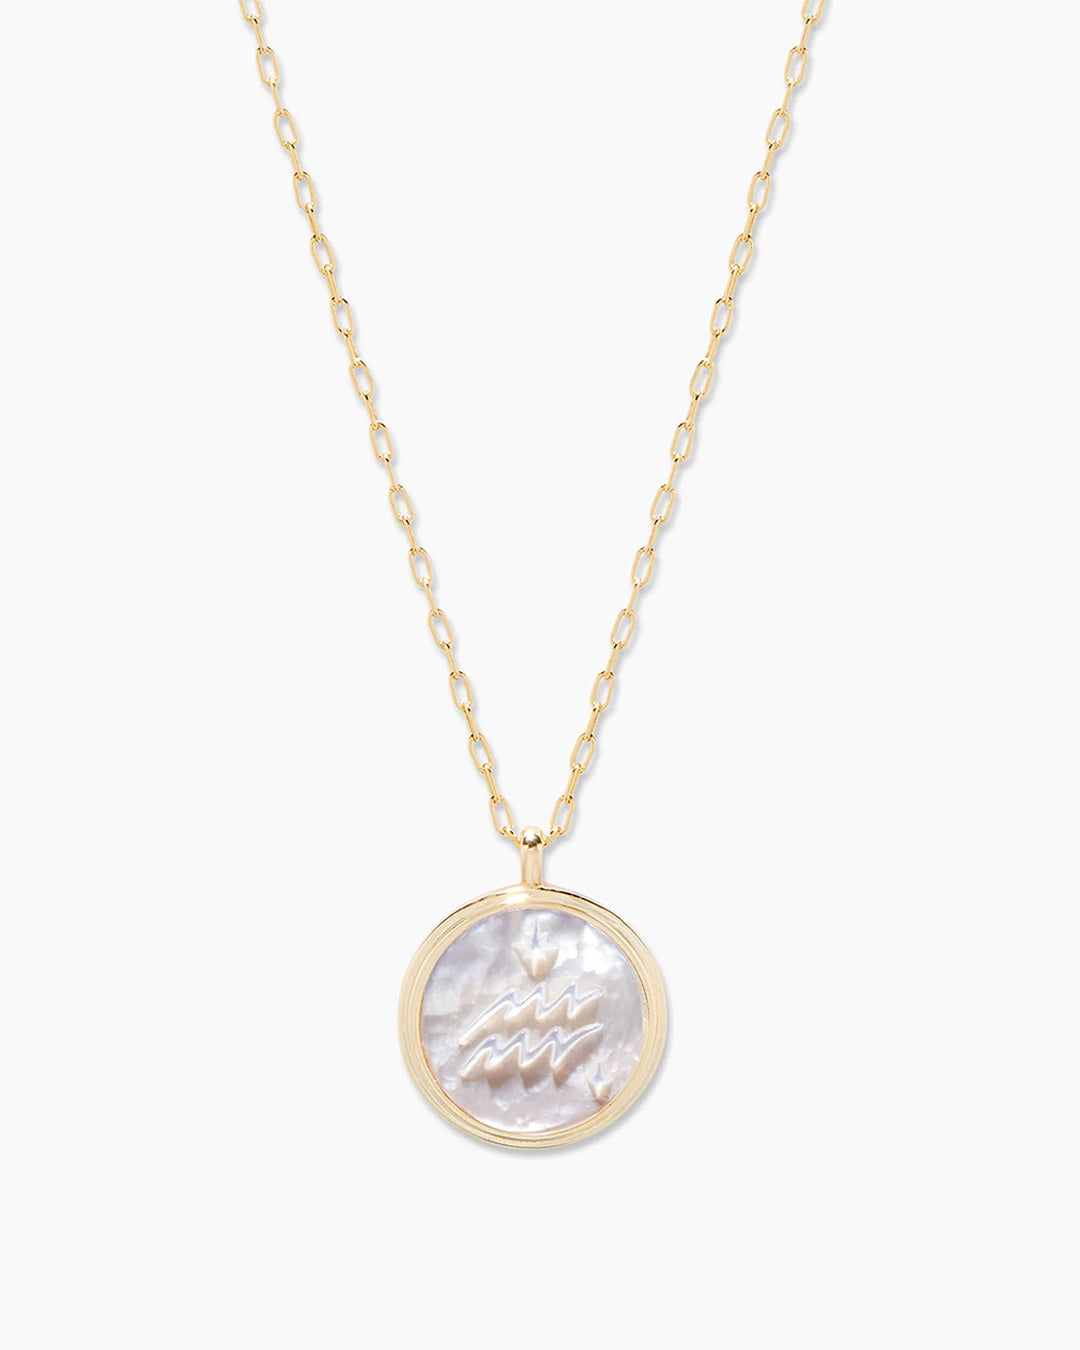 Gorjana Zodiac Necklace in Aquarius on a white background